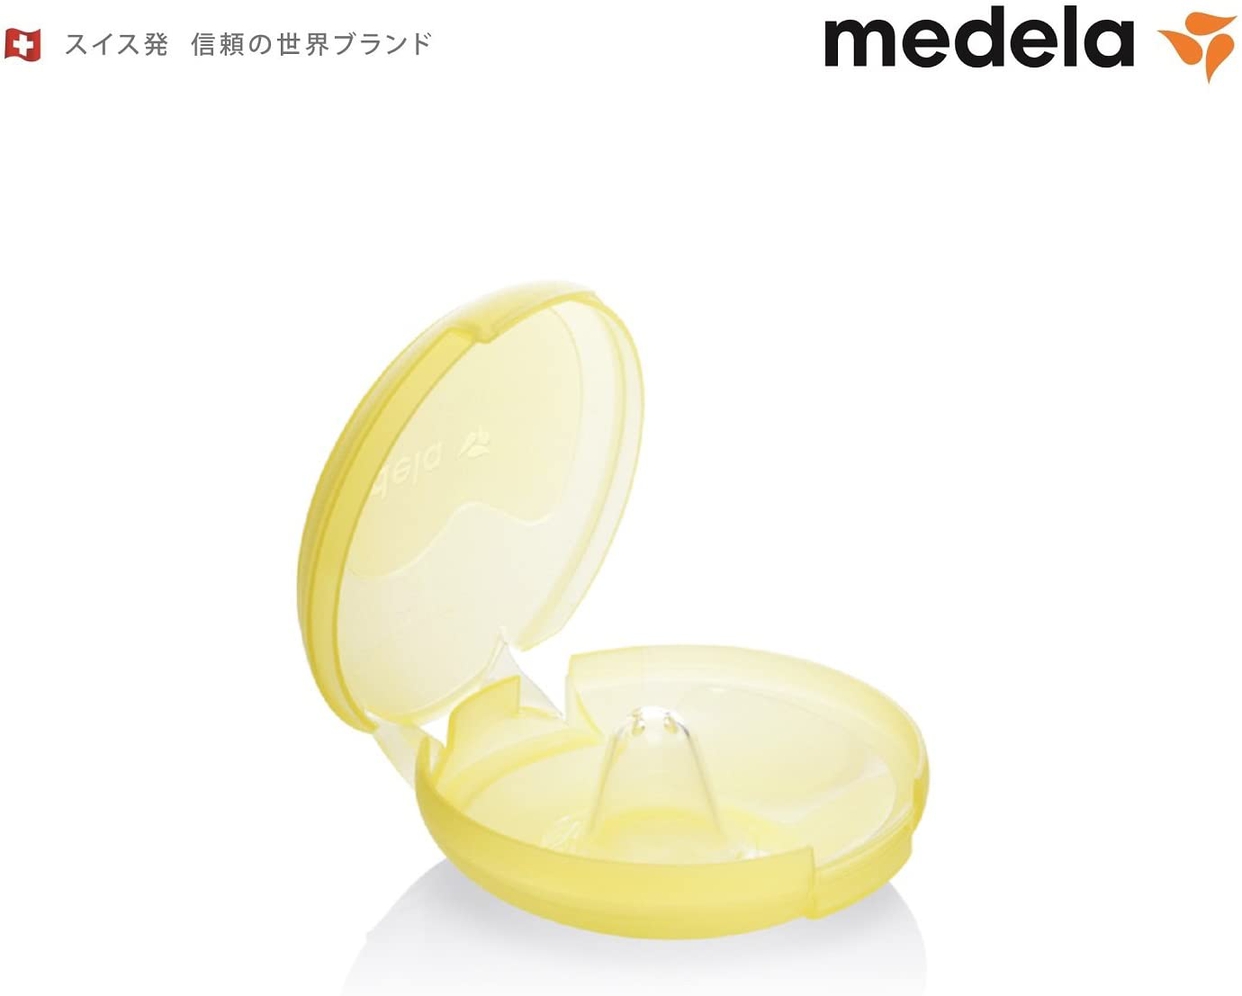 medela(メデラ) コンタクトニップルシールドの商品画像2 